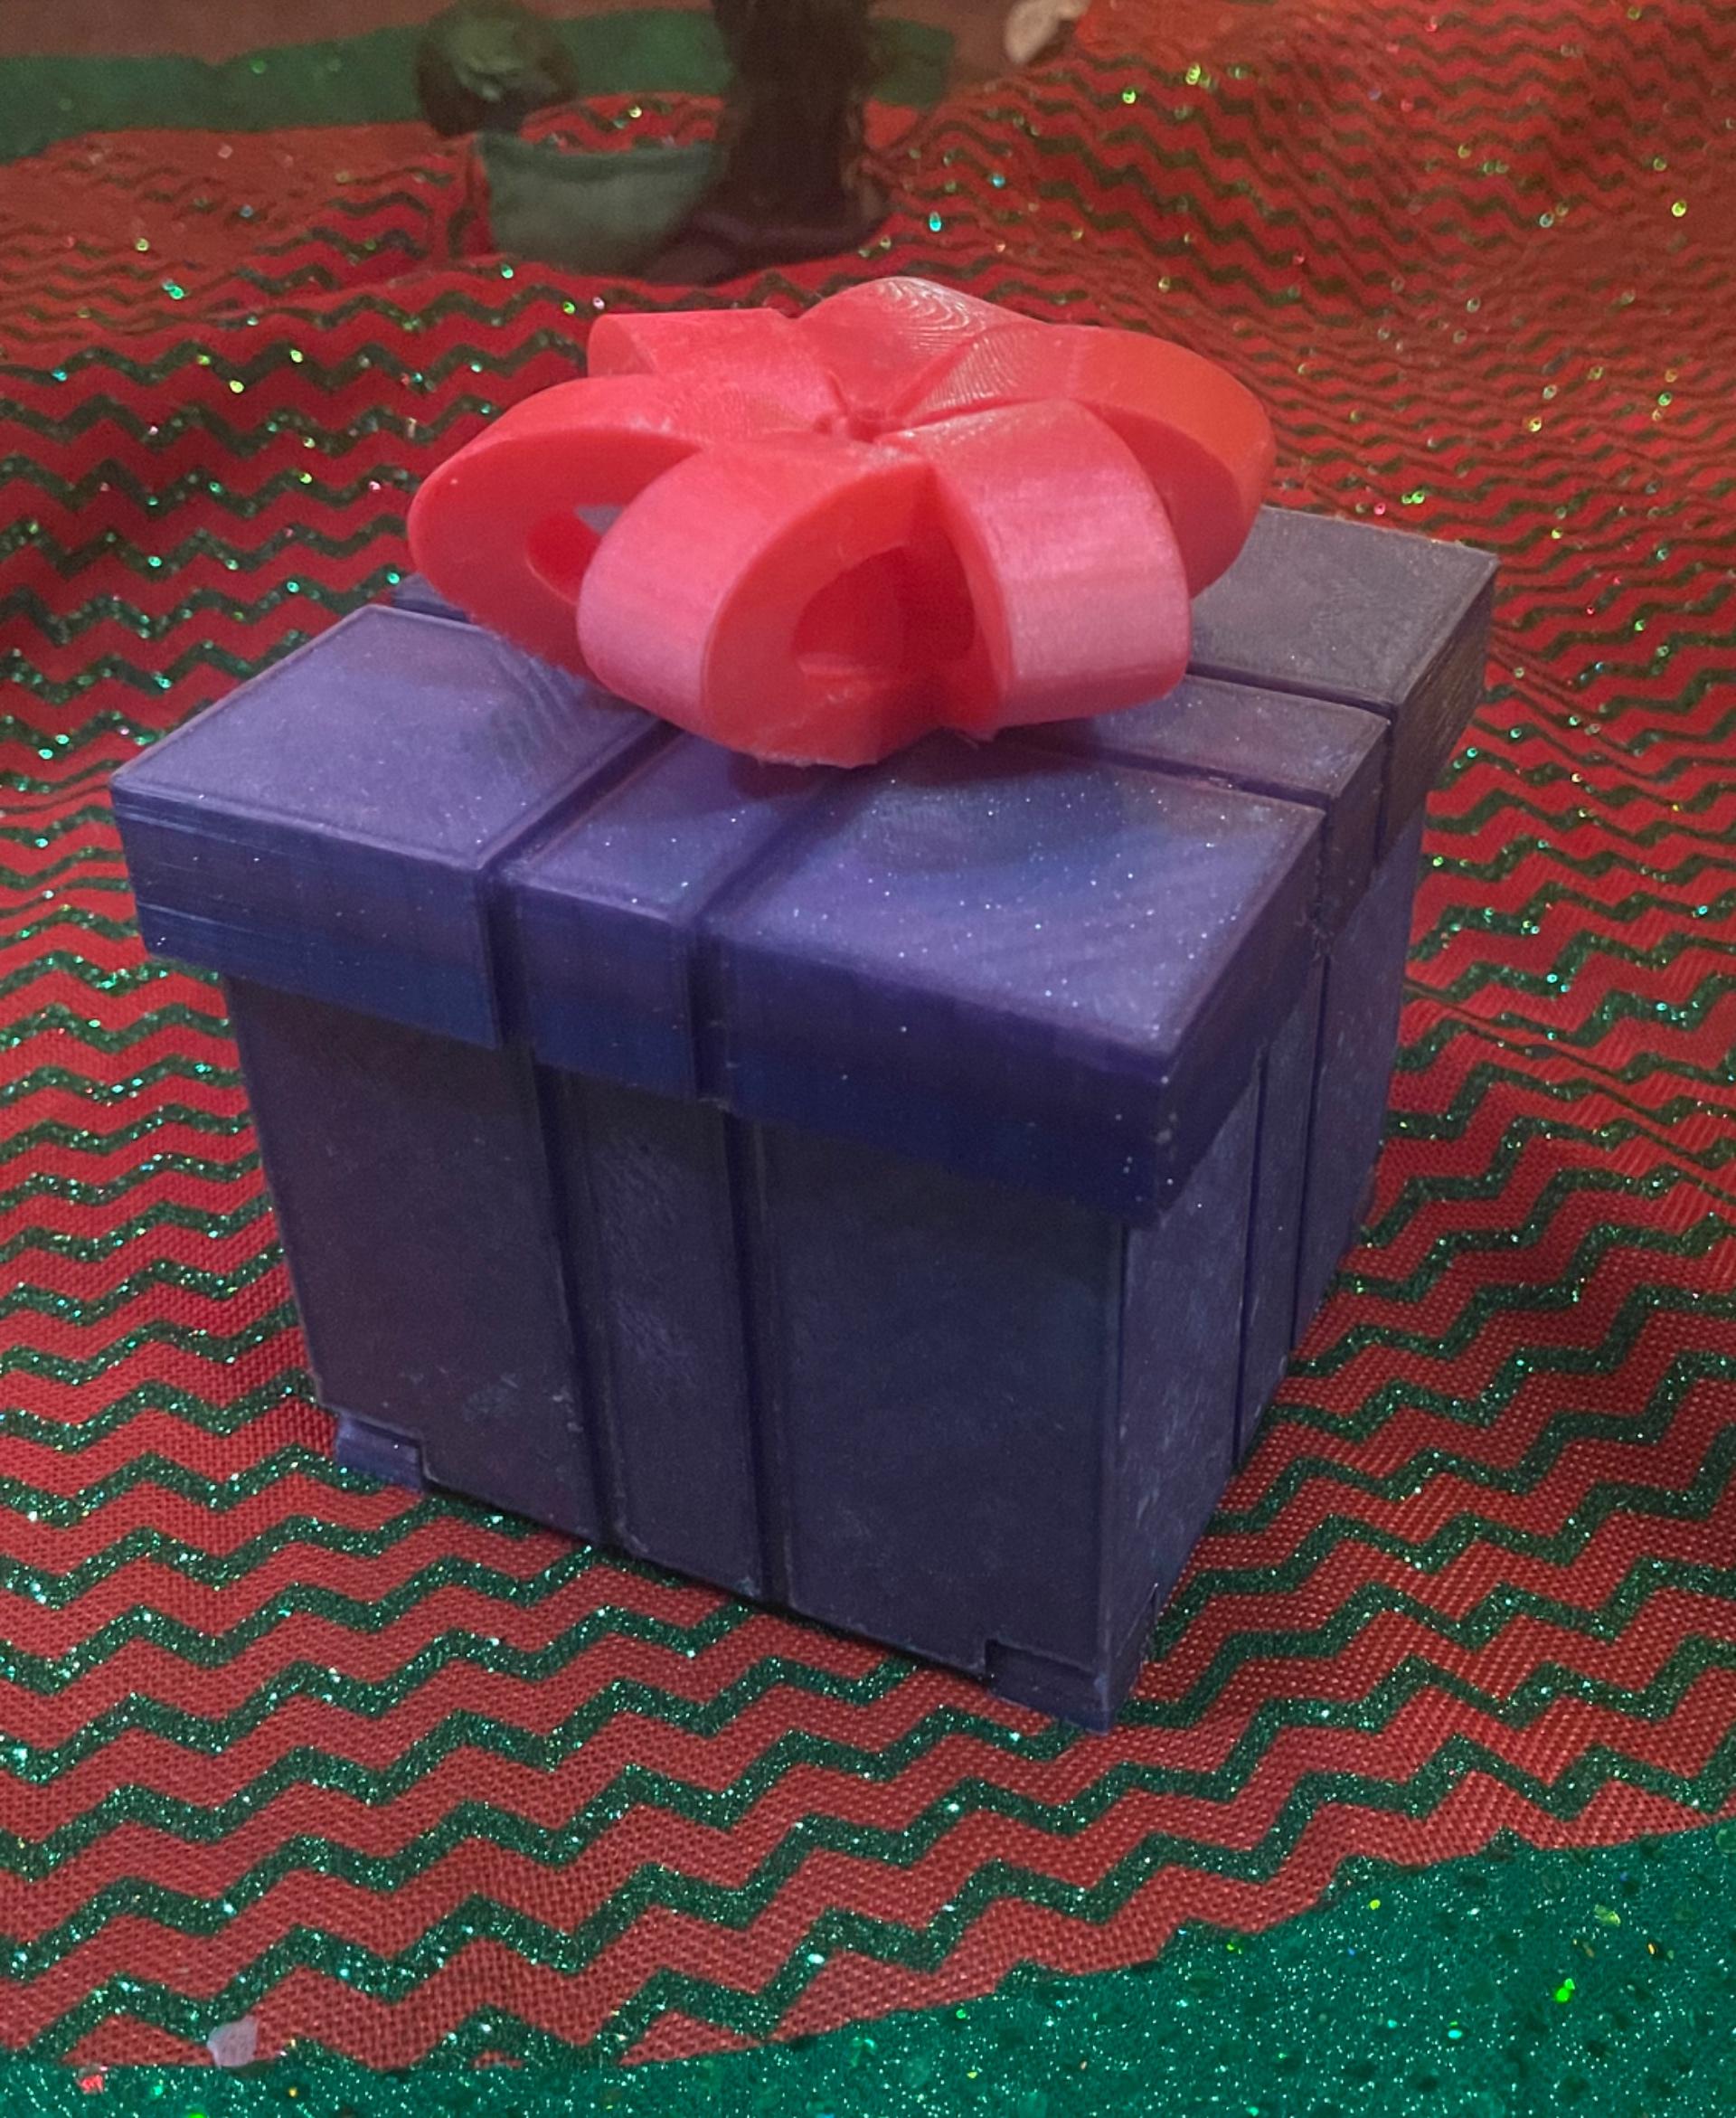 Collapsing Gift Box 3d model